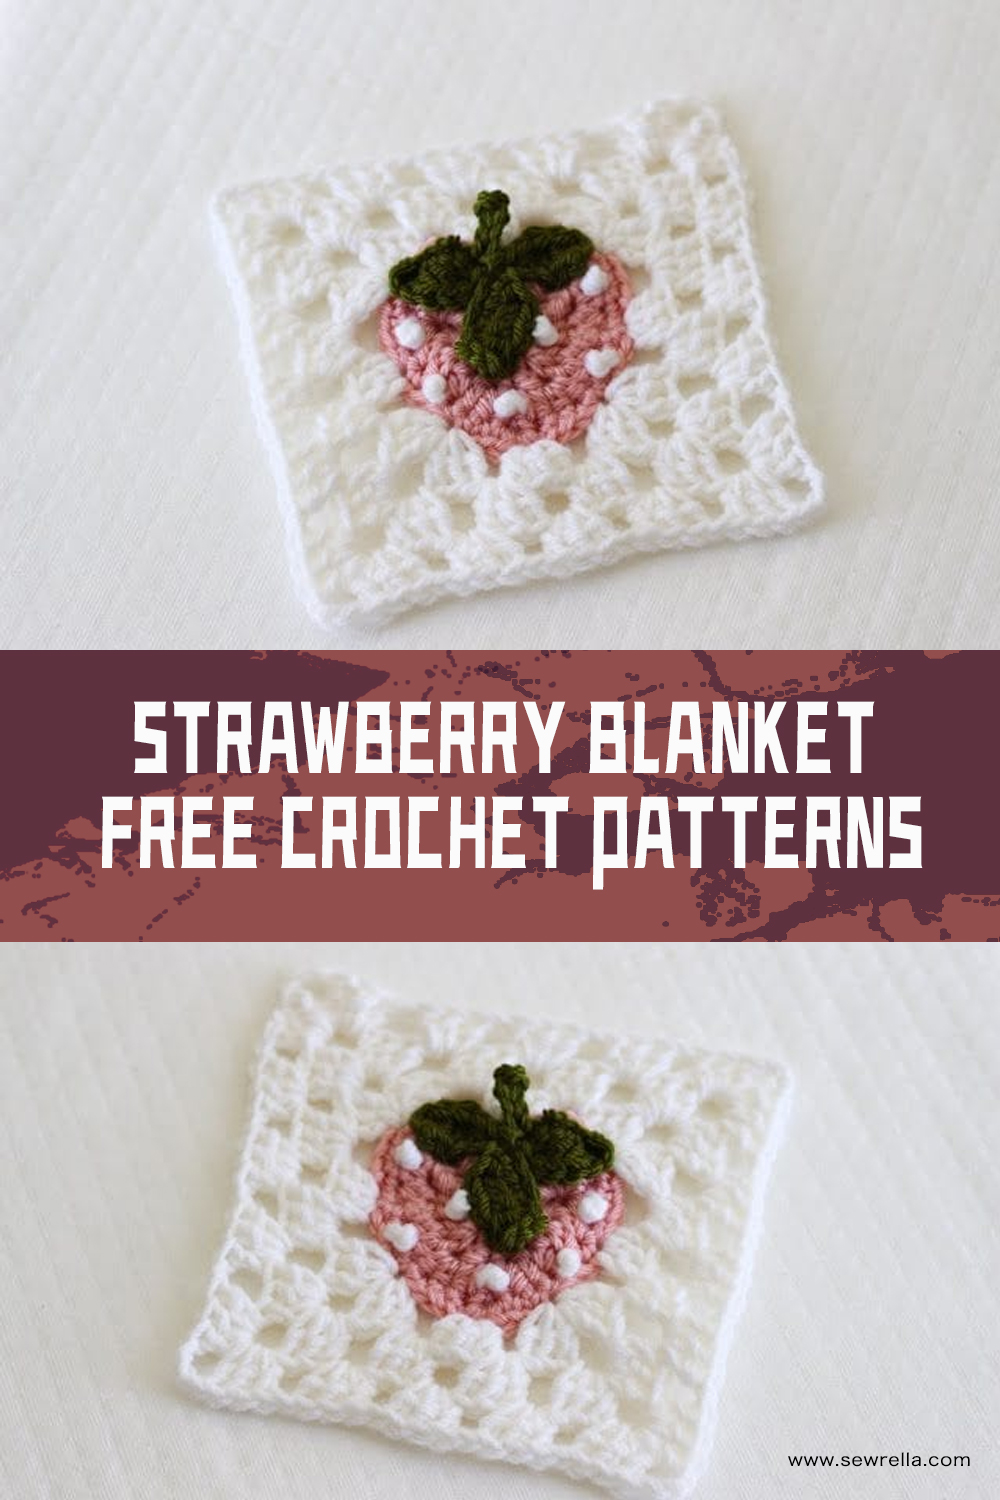 FREE Crochet Strawberry Blanket Patterns